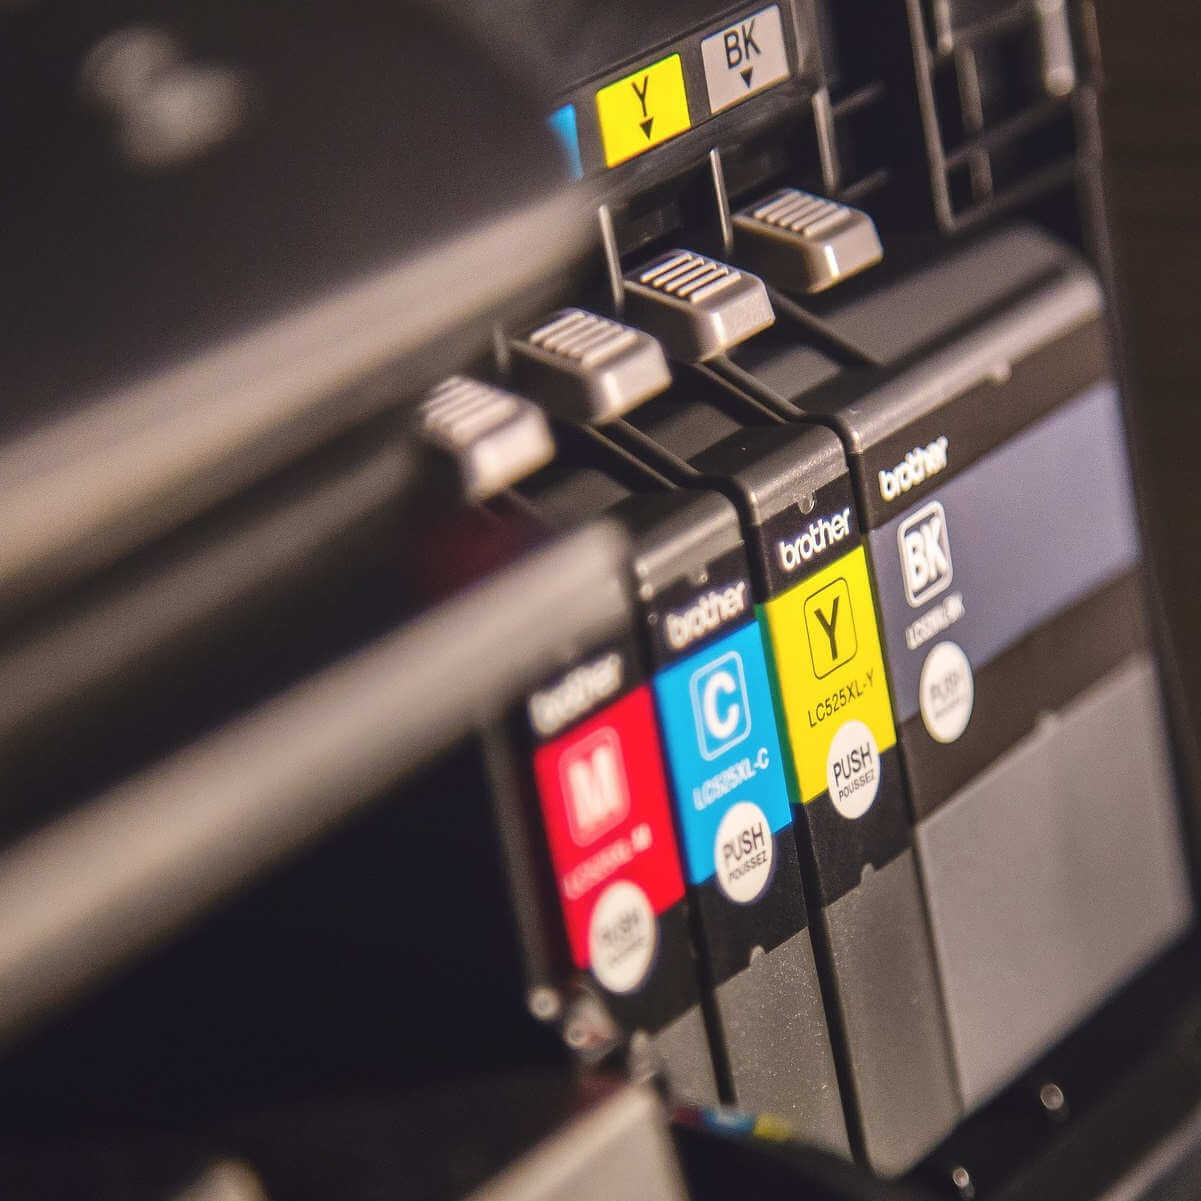 Perbaiki printer dalam mode kesalahan [Brother, Epson, HP, Canon]